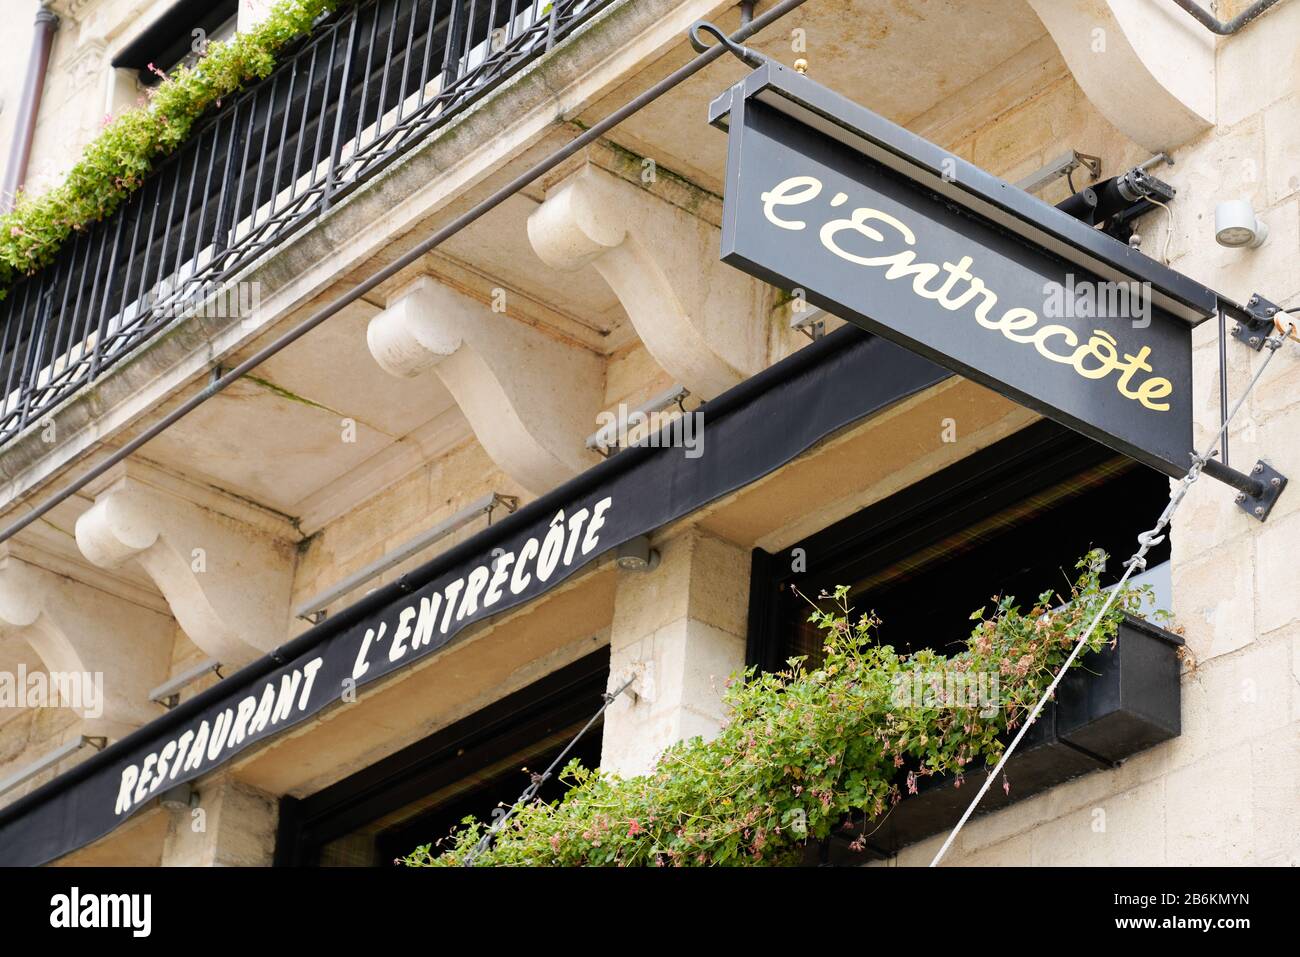 Bordeaux , Aquitaine / France - 01 15 2020 : l'entrecote sign logo brand french chain restaurant building Stock Photo